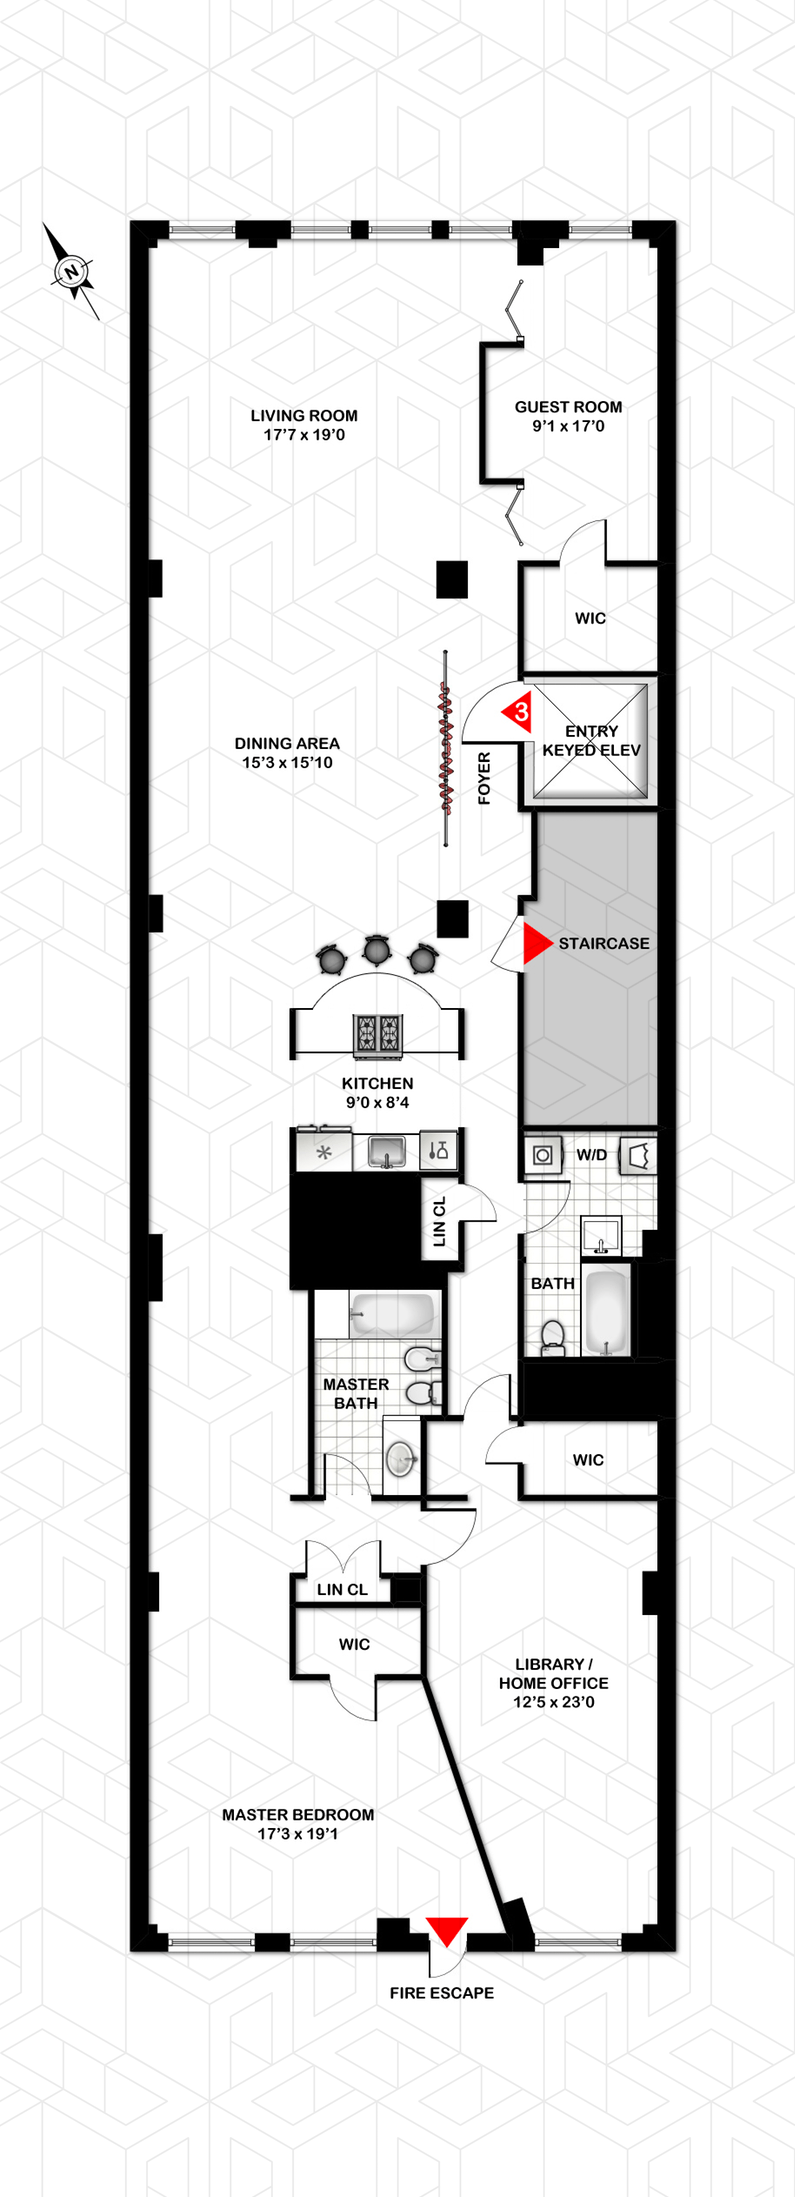 Floorplan for 58 West 15th Street, 3